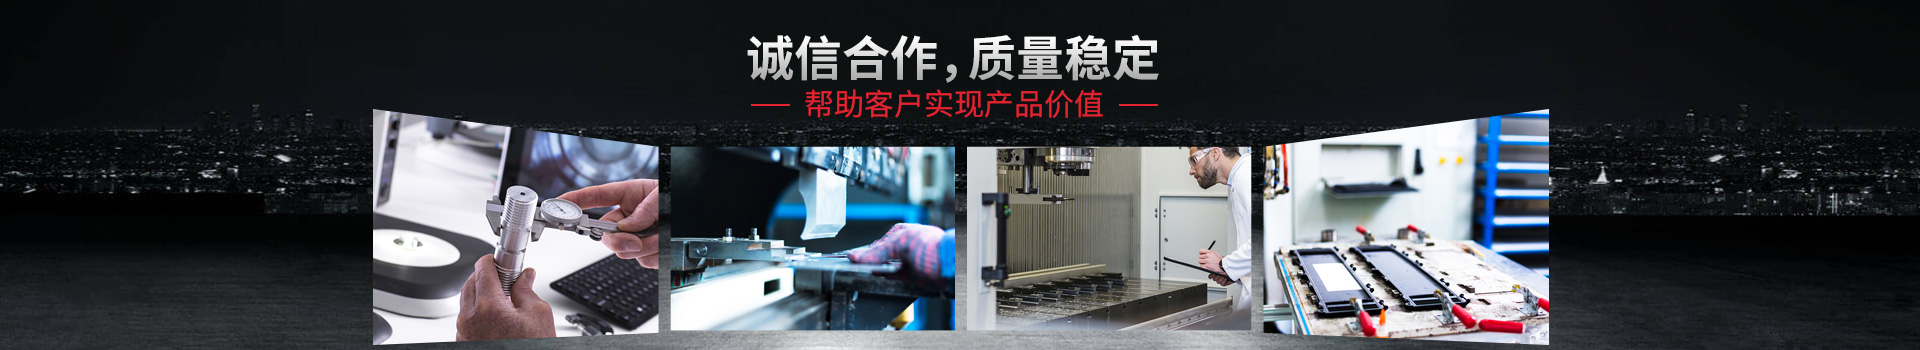 CNC精密機械加工,CNC加工定制,深圳CNC加工廠家——誠信合作,質量穩定